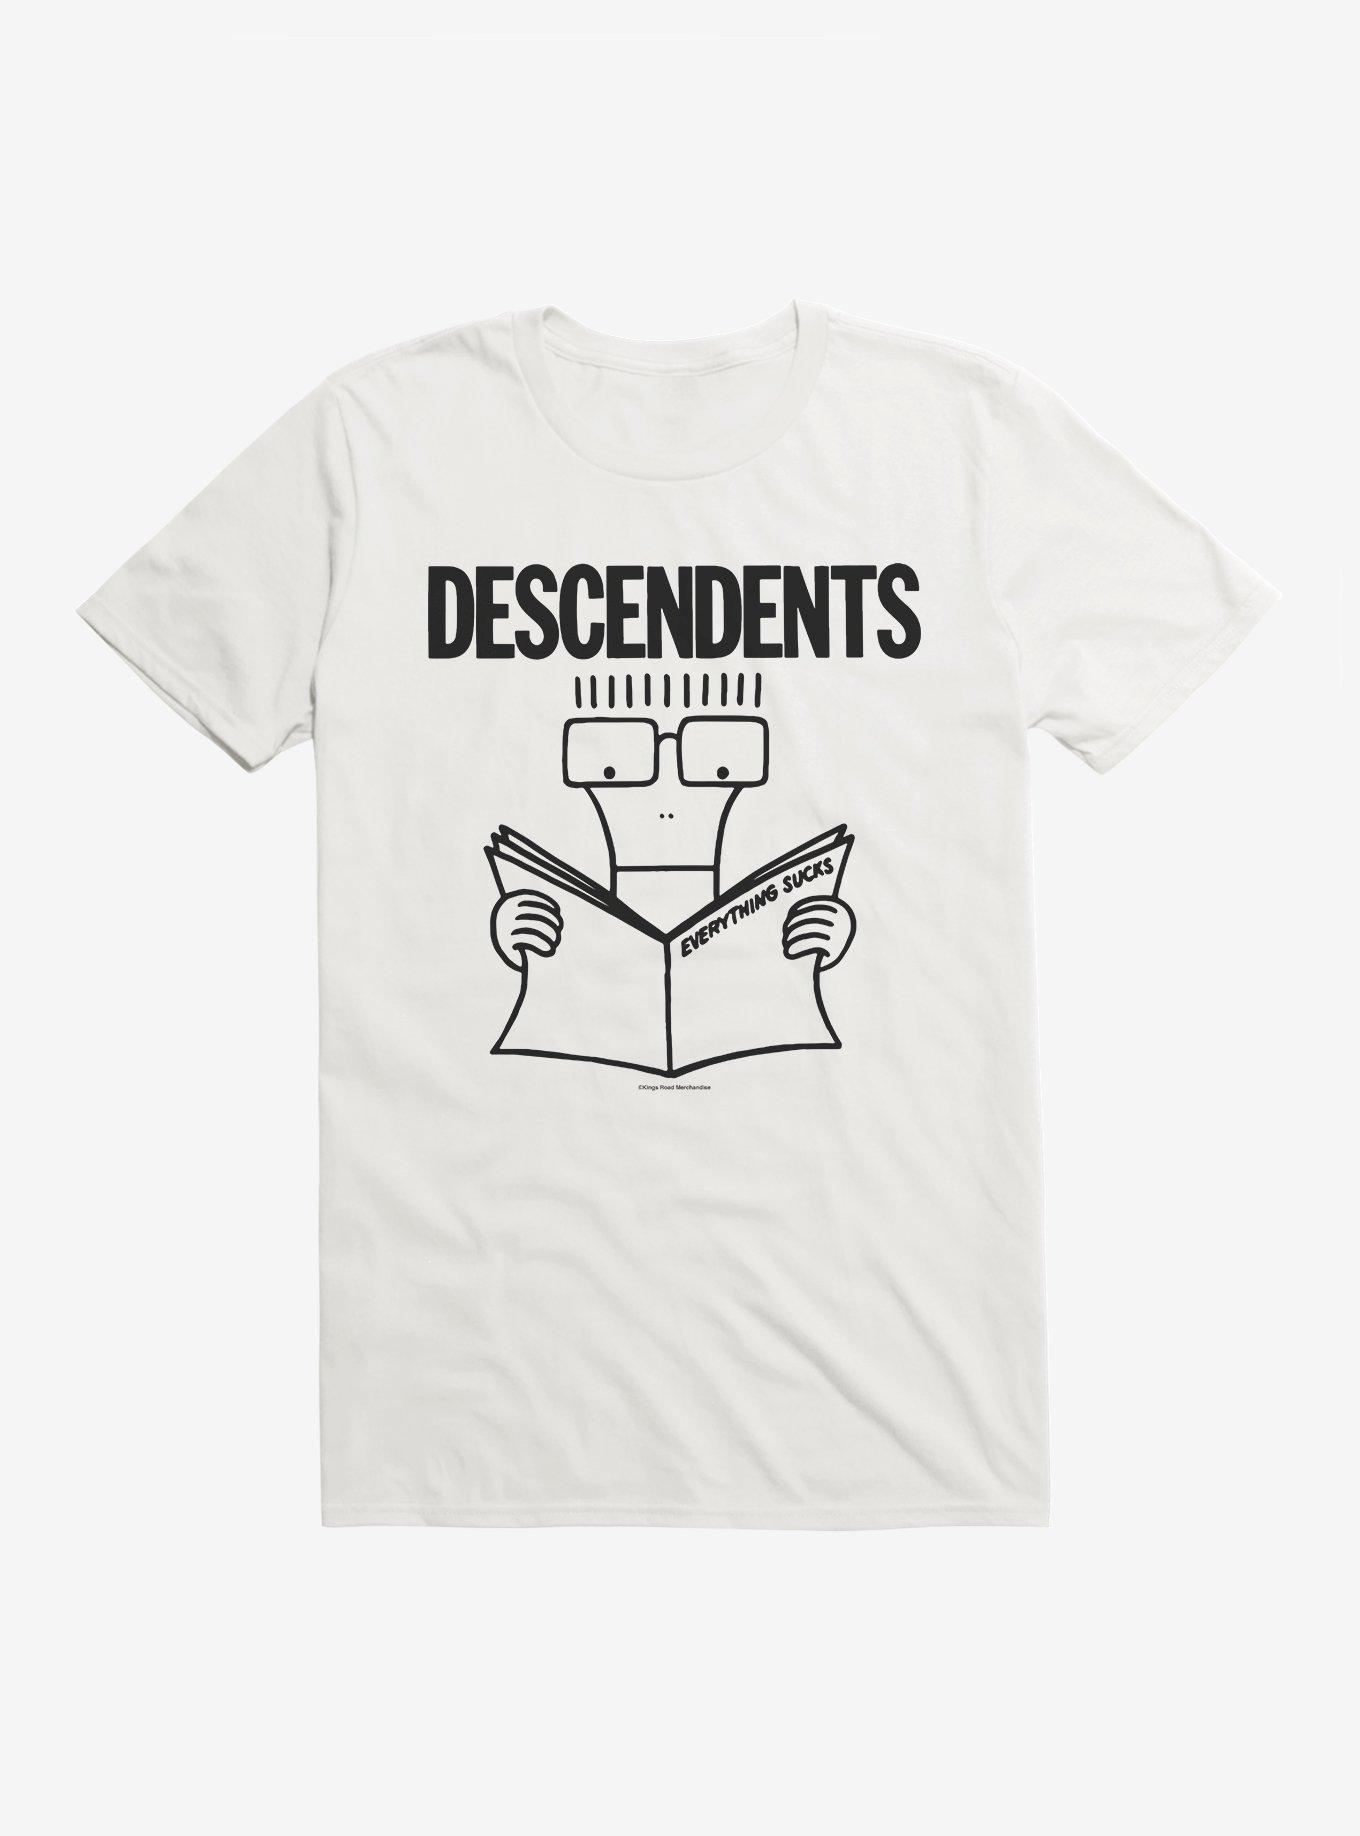 Descendents Everything Sucks Milo T Shirt Hot Topic